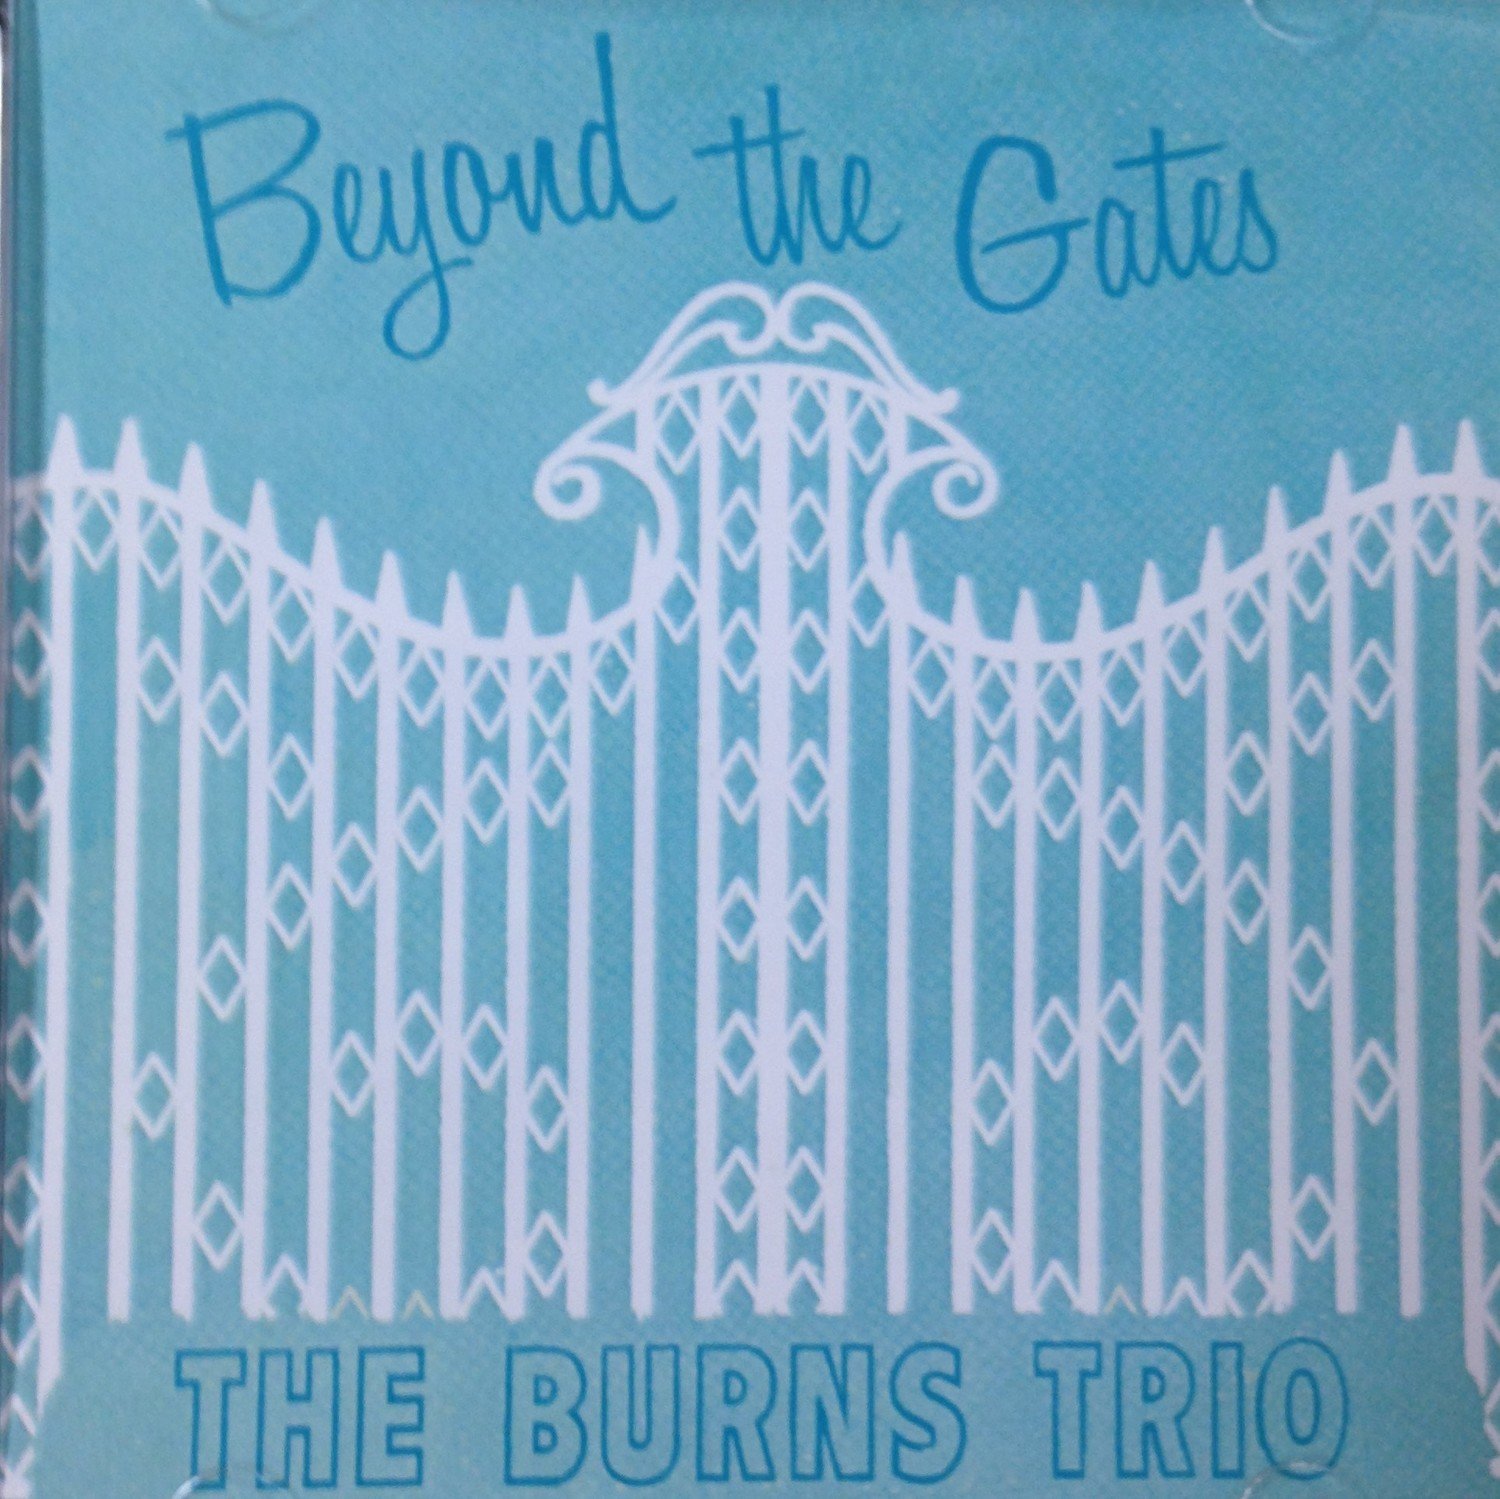 The Burns Trio:  Beyond the Gates  CD